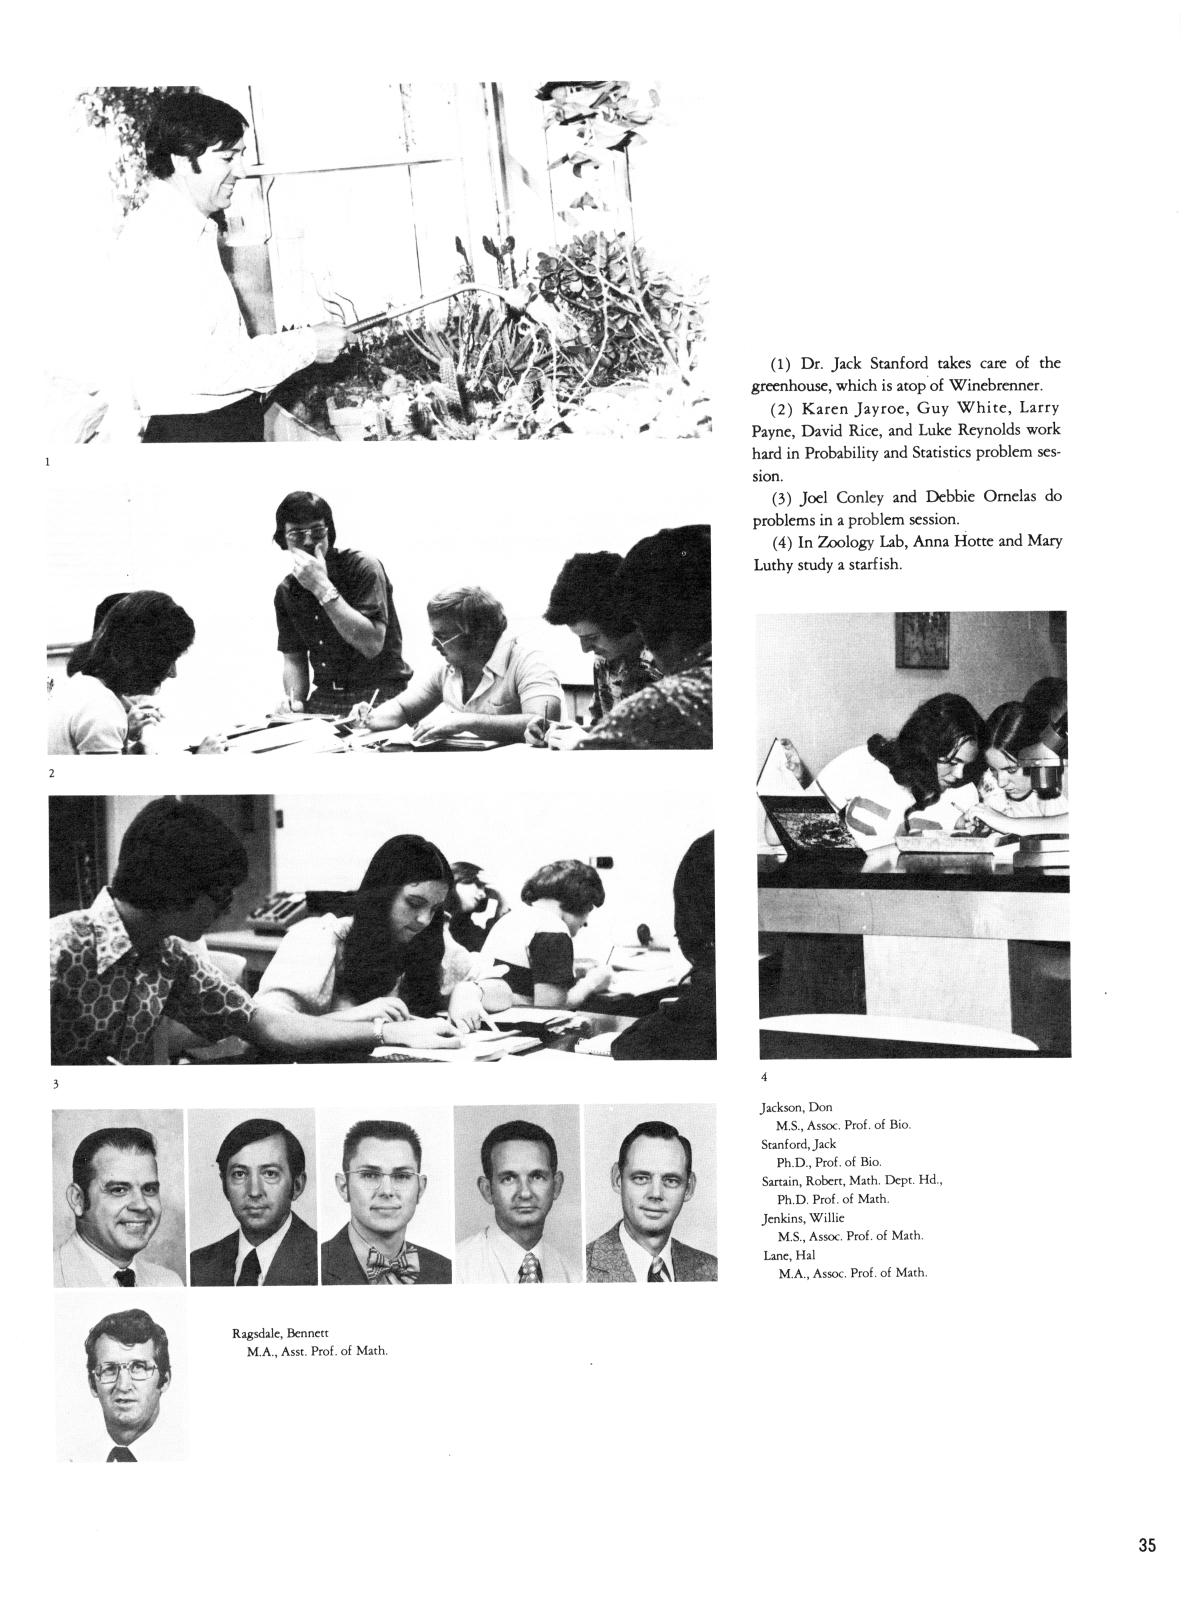 The Lasso, Yearbook of Howard Payne University, 1976
                                                
                                                    35
                                                